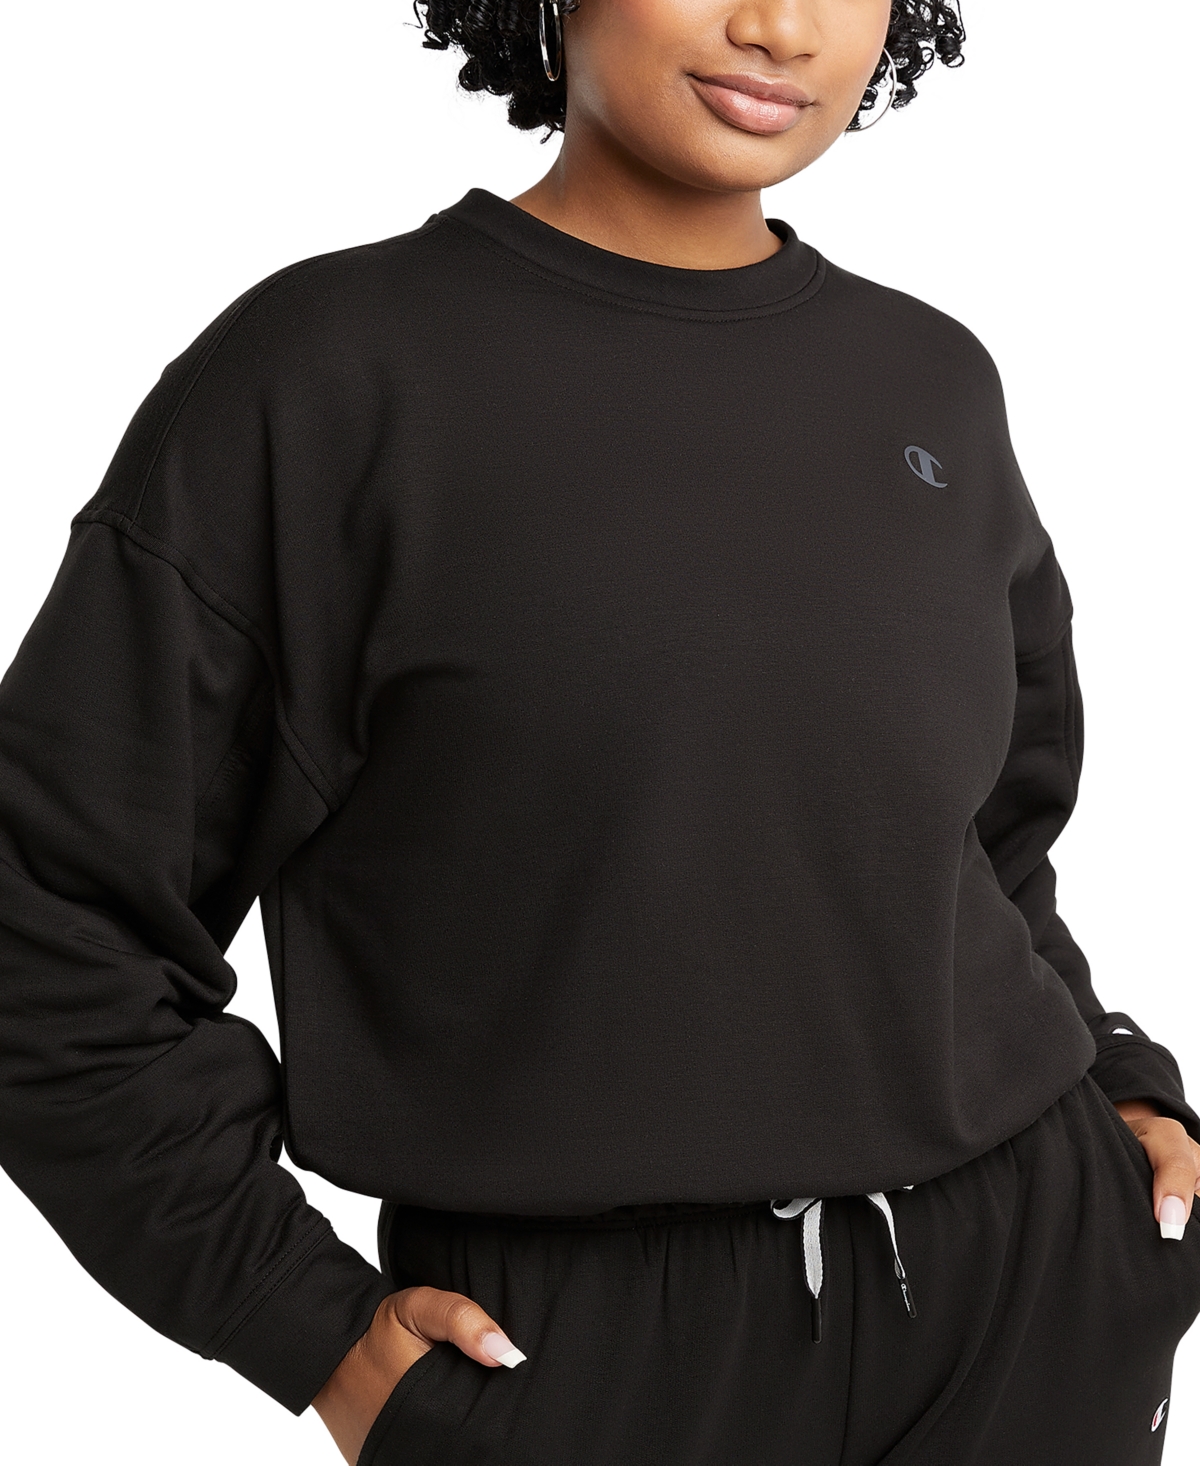 Champion Women's Soft Touch Fleece Sweatshirt